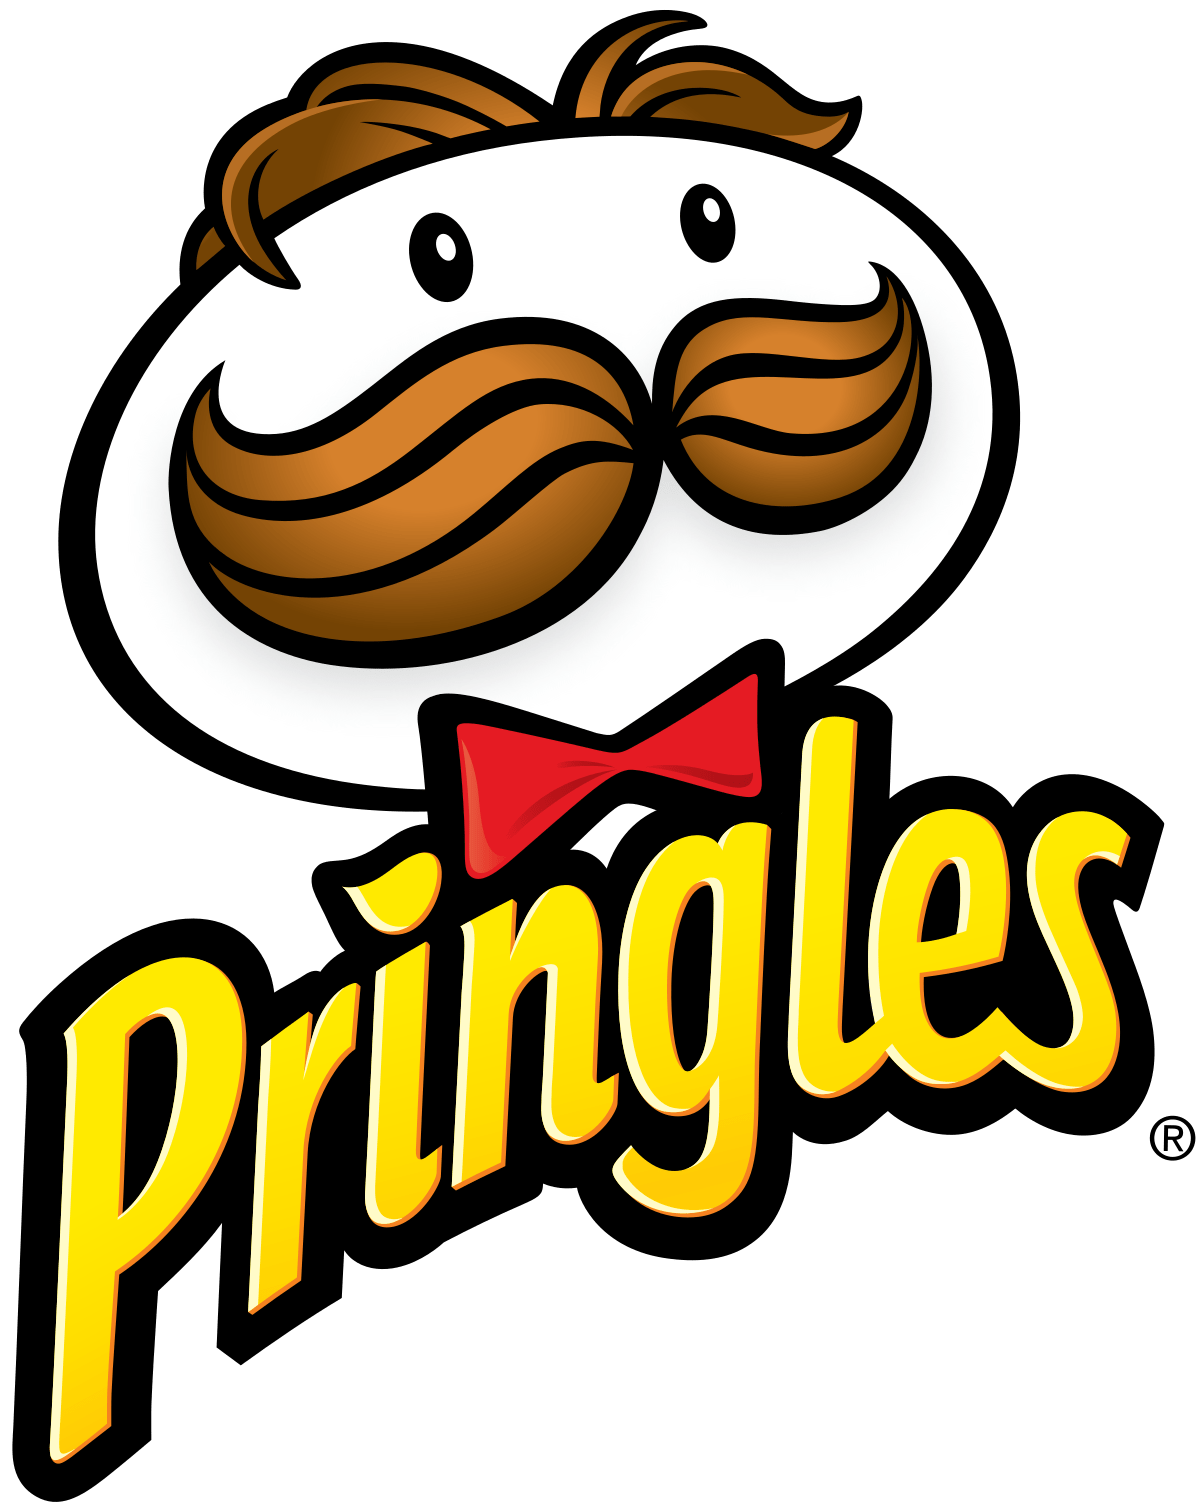 Pringles Logo Transparent Png - Pluspng, Pringles Logo PNG - Free PNG